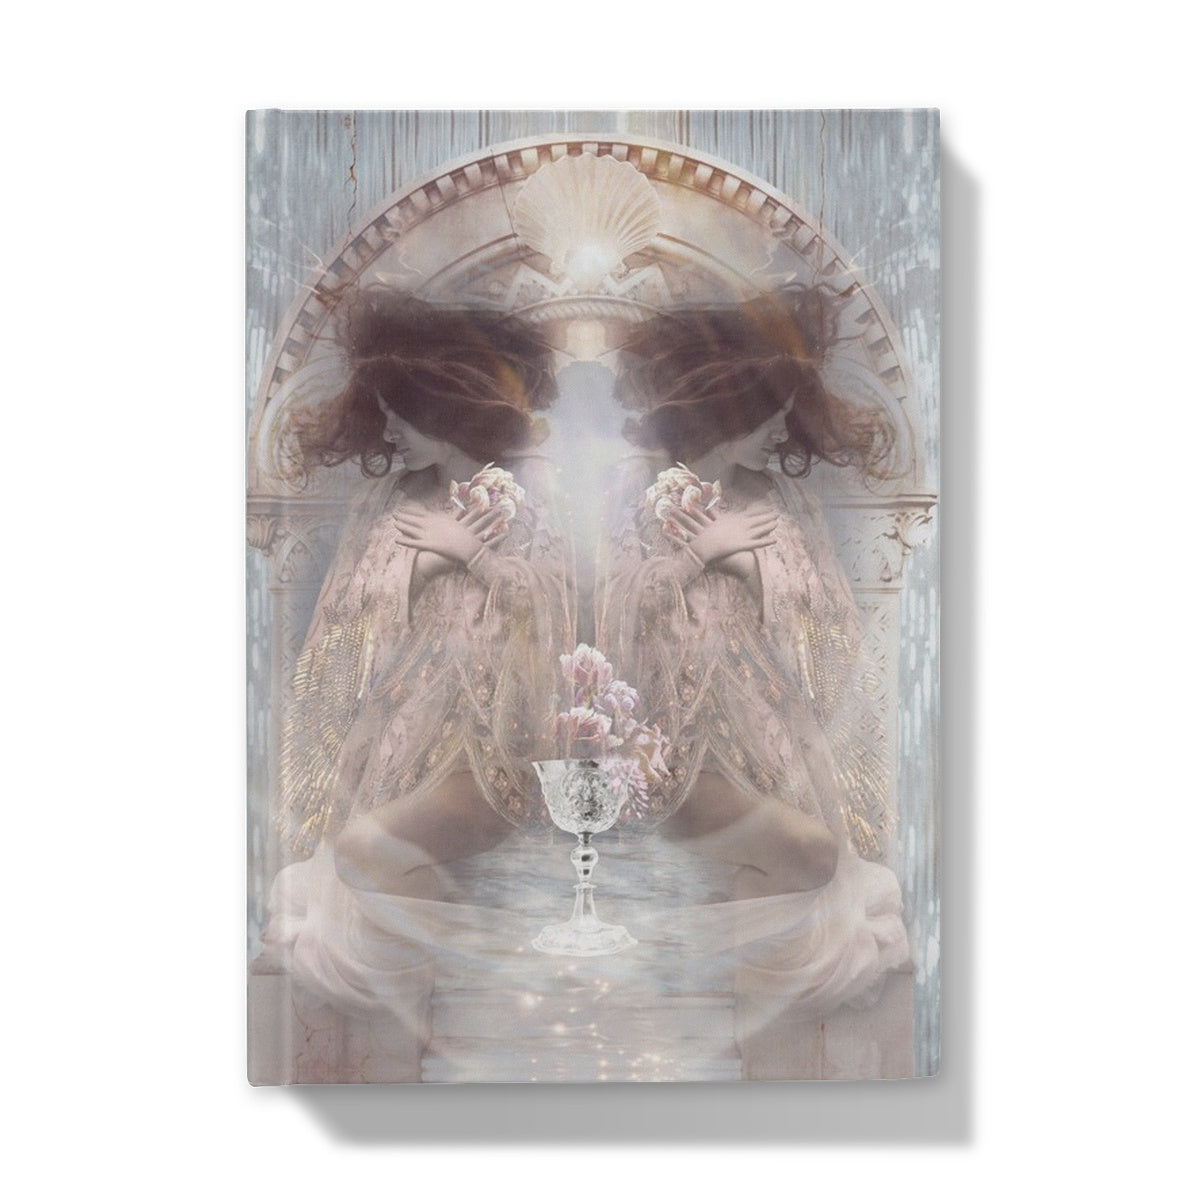 Aphrodite Hardback Journal - Starseed Designs Inc.